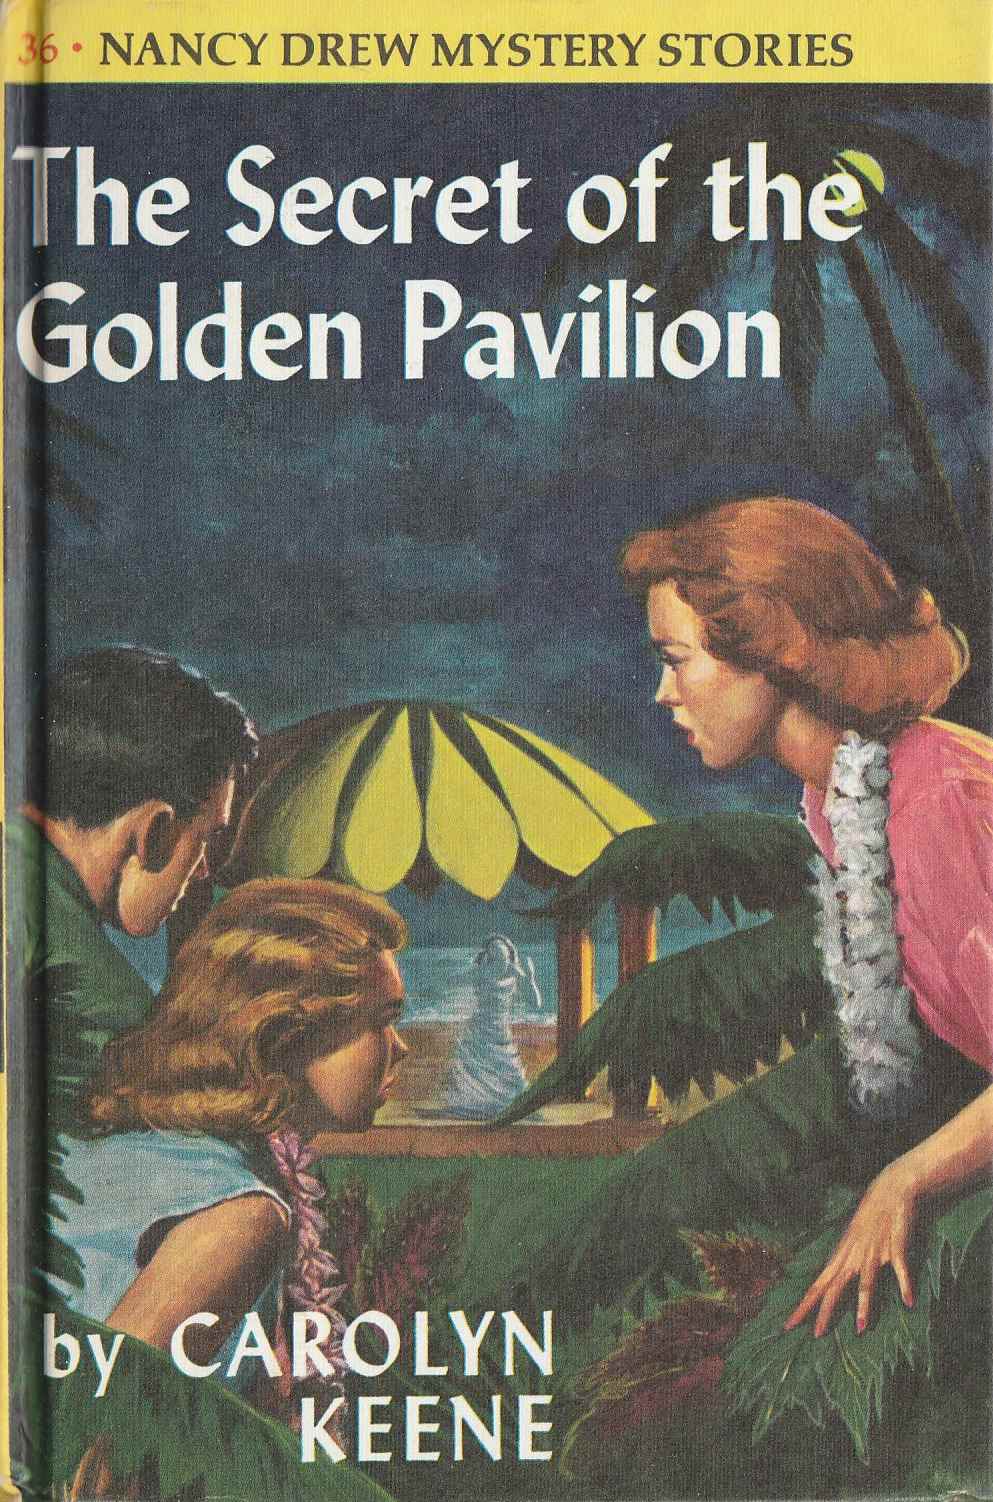 The Secret of the Golden Pavilion